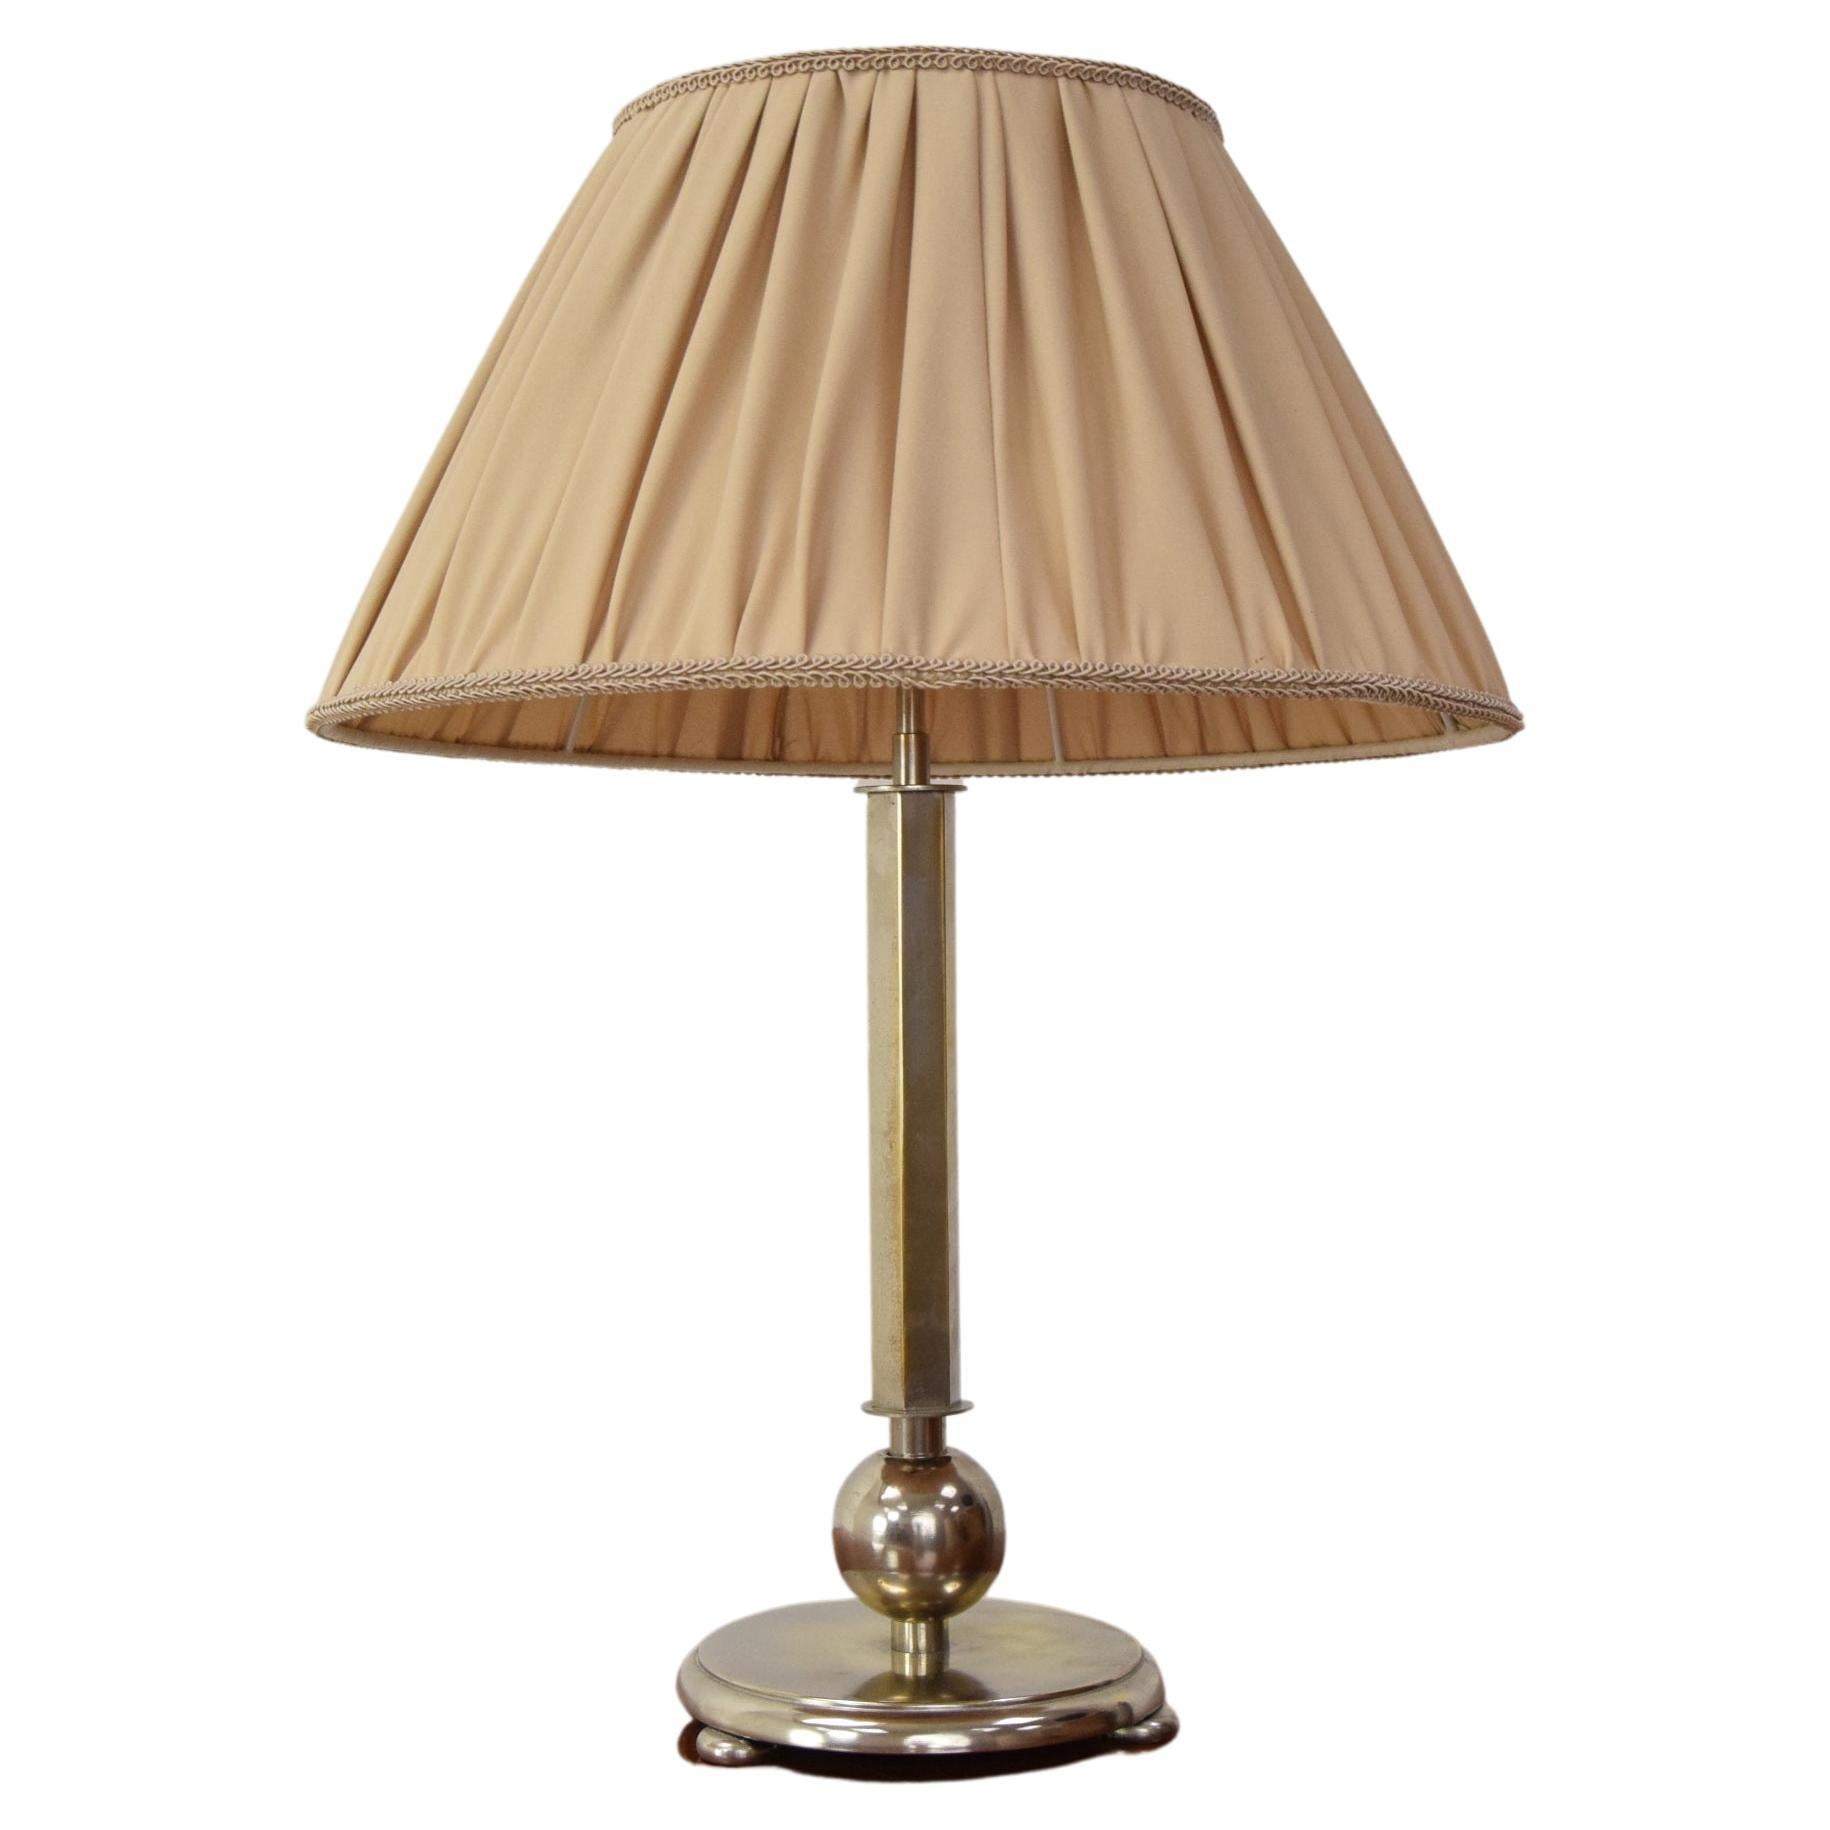 Art Deco Table Lamp, circa 1930's